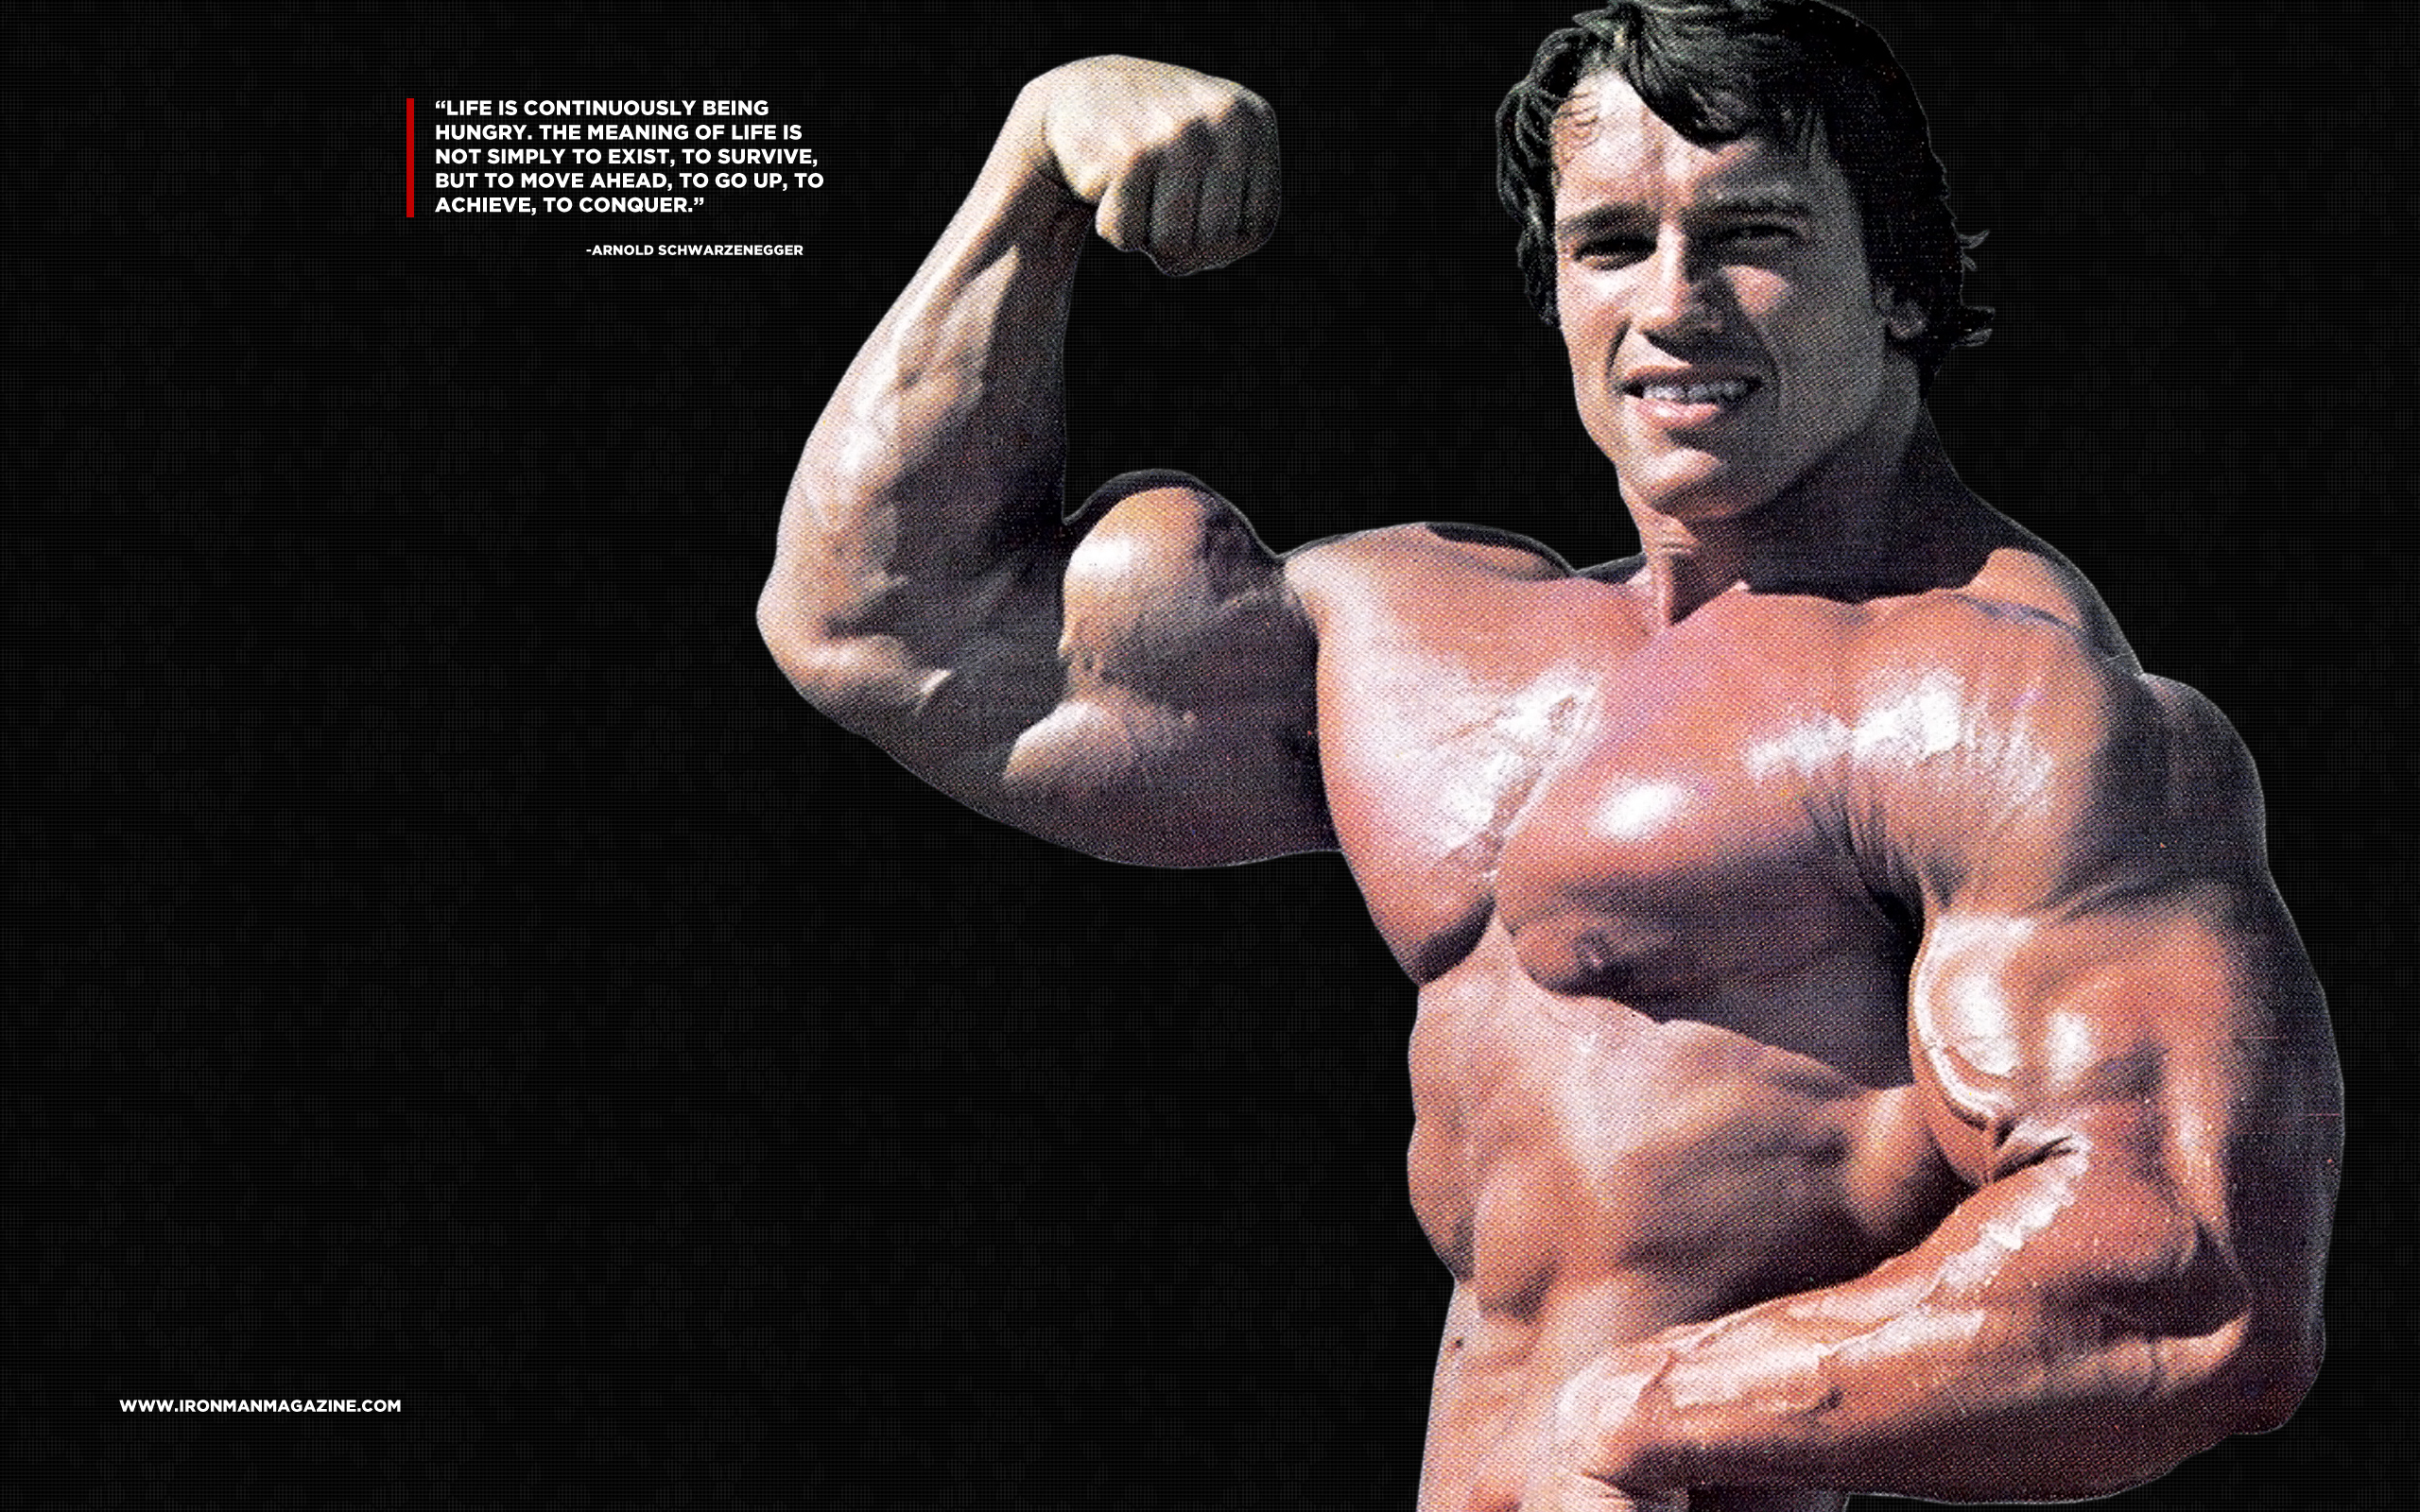 Arnold Schwarzenegger Desktop Wallpaper